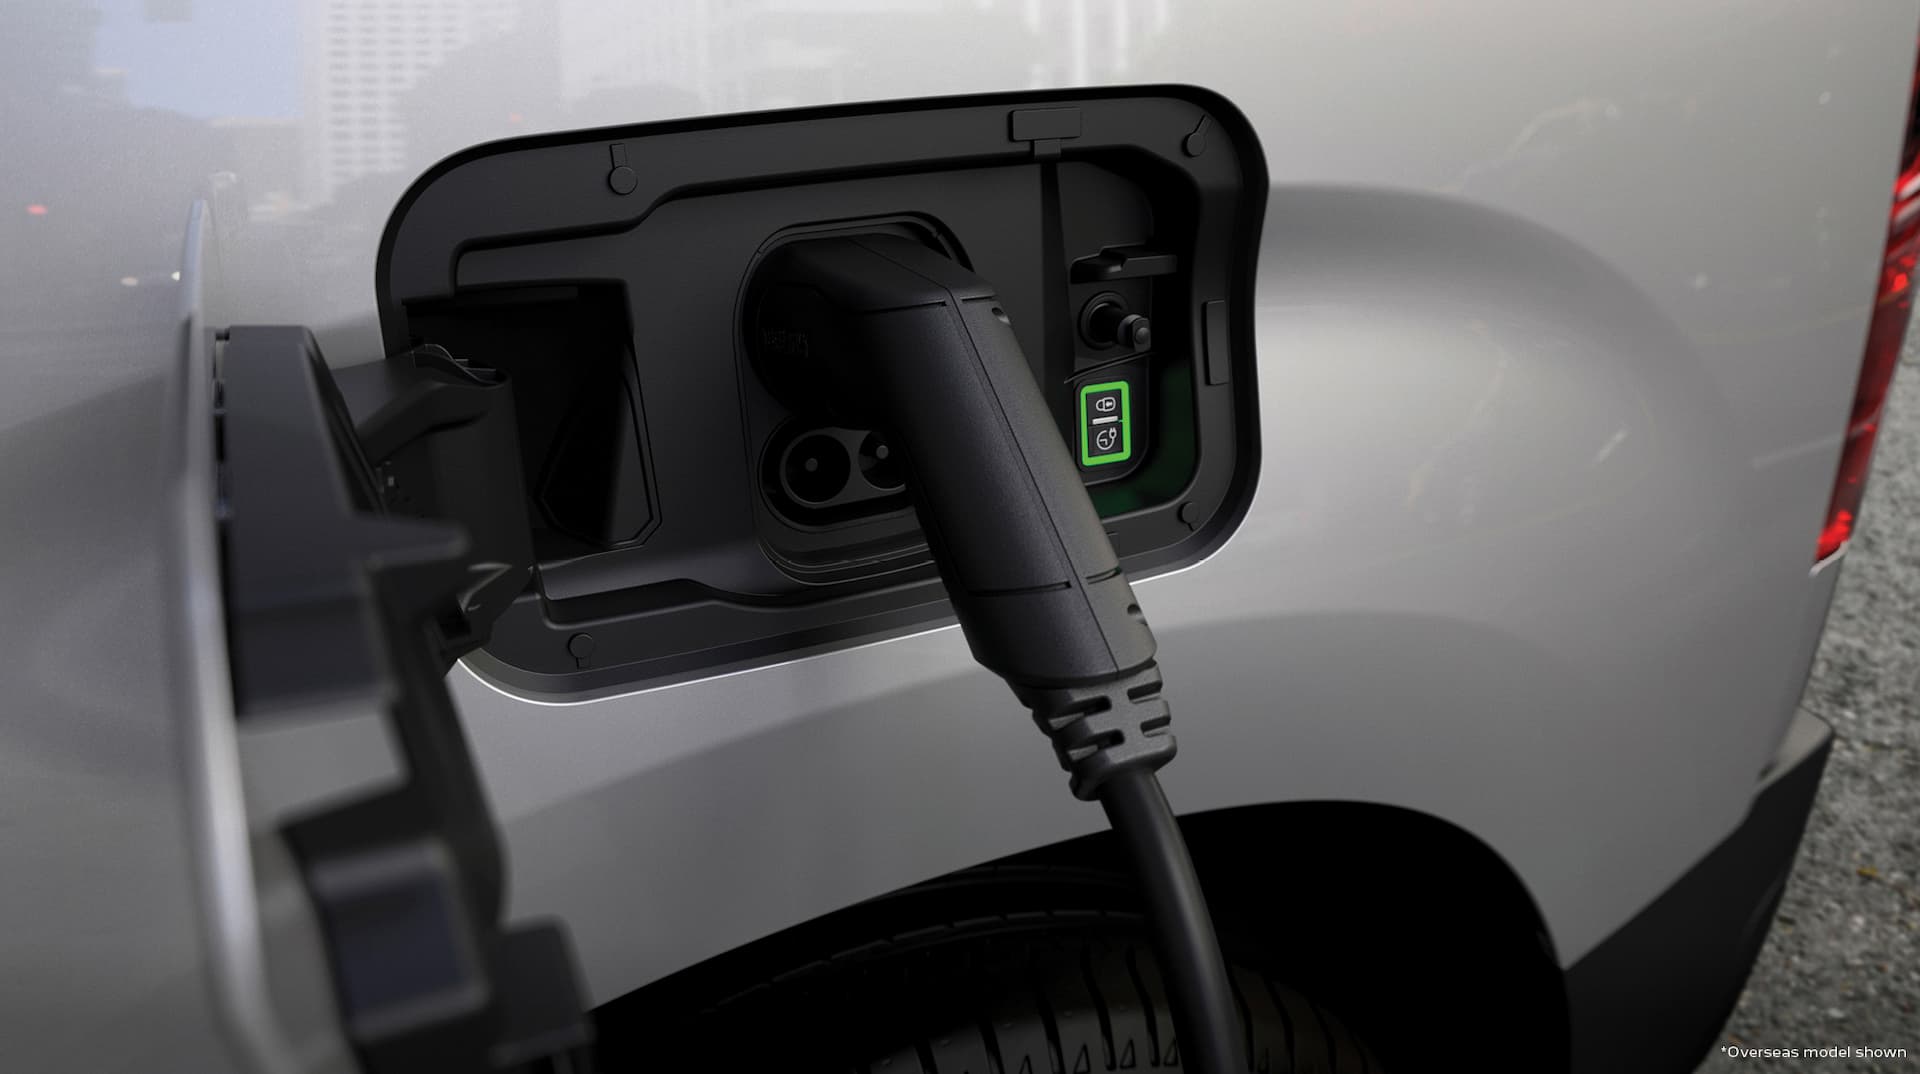 Peugeot e-Partner van charging port and rear views